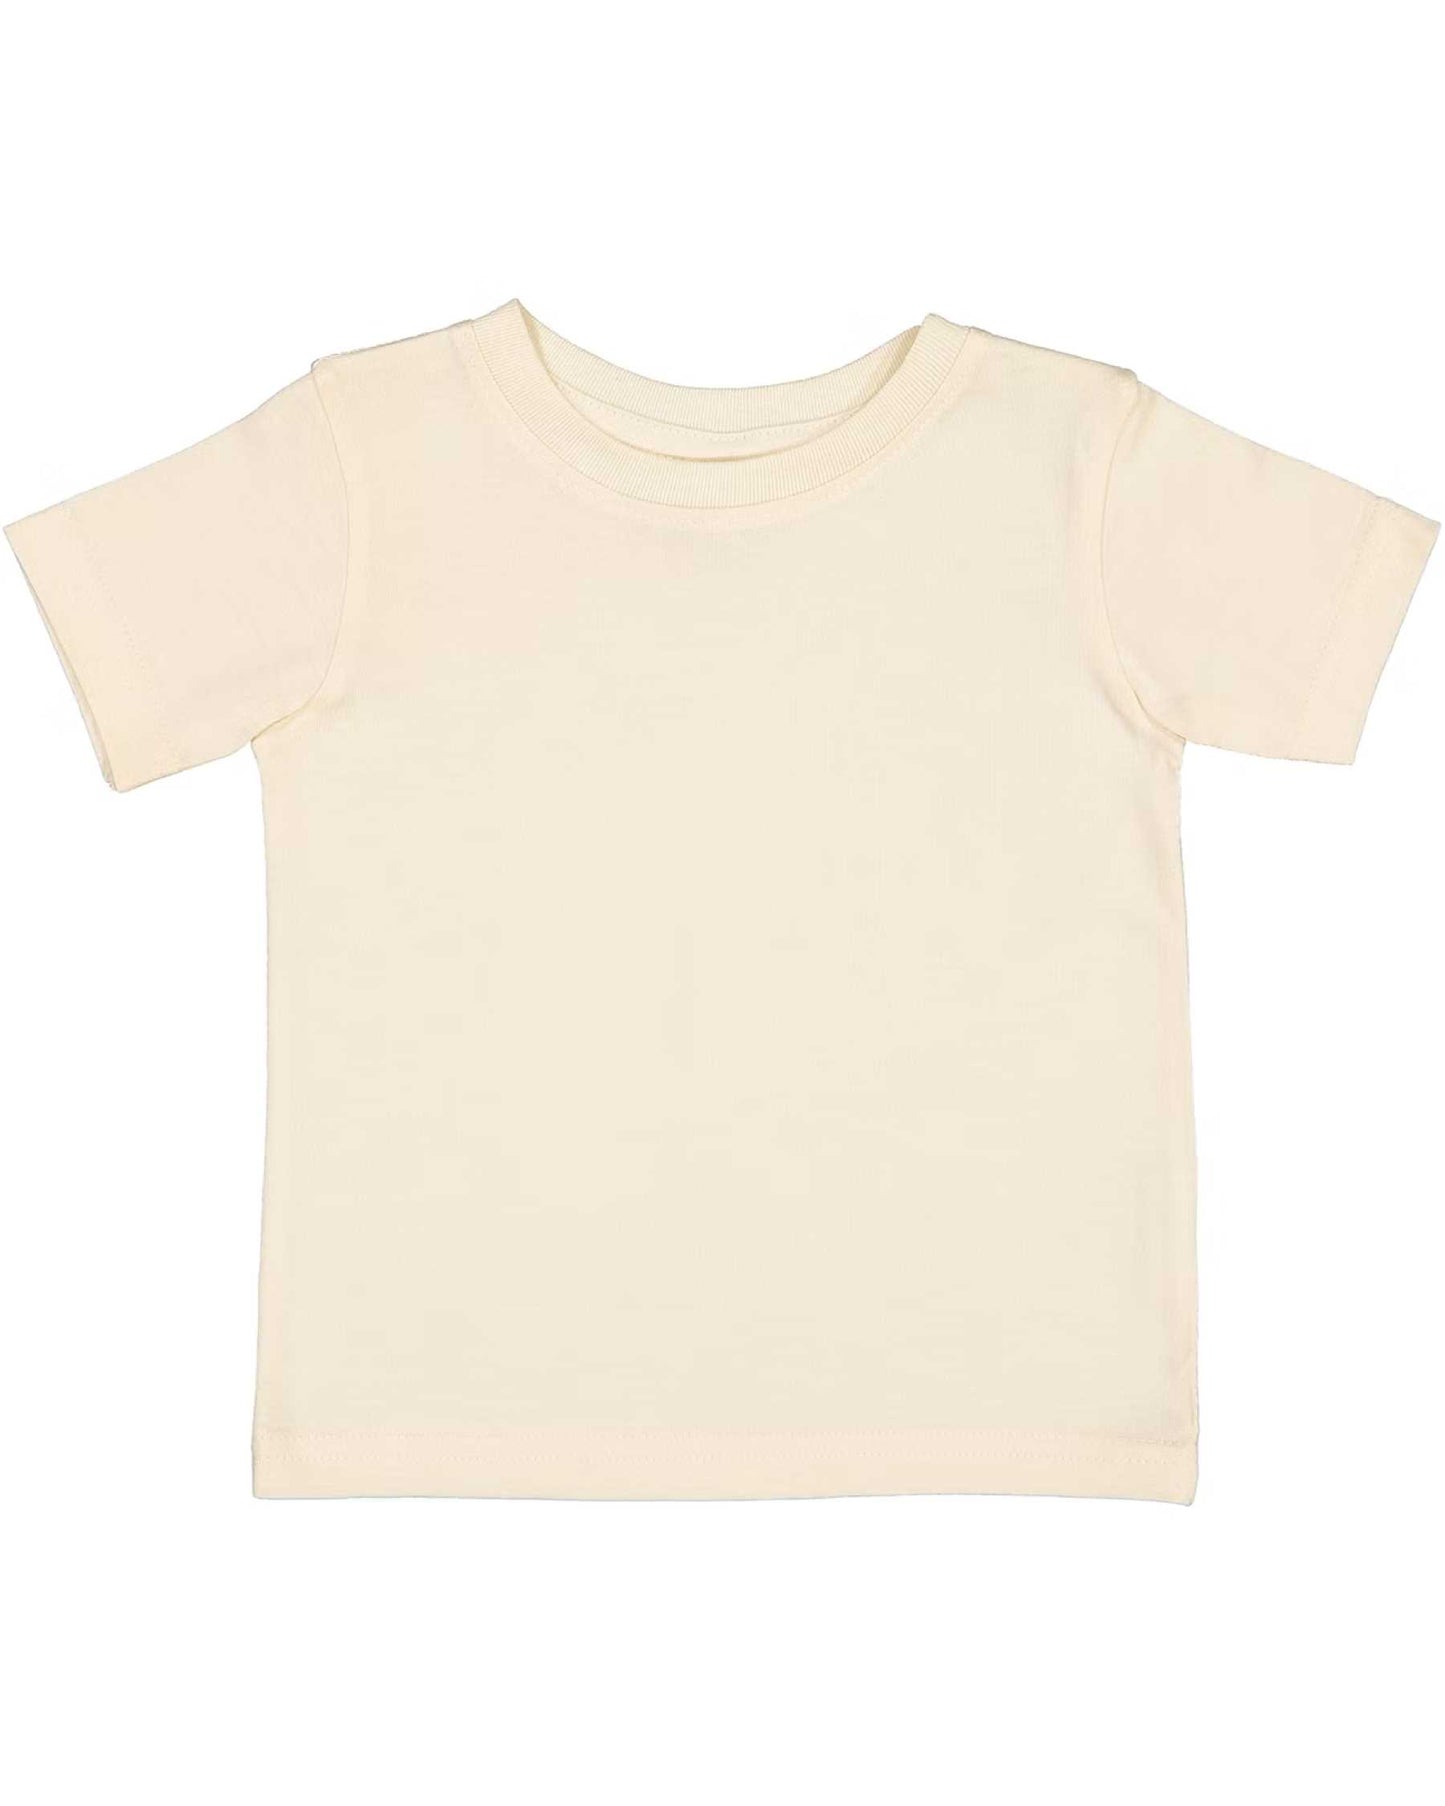 Infant Short sleeve tshirt